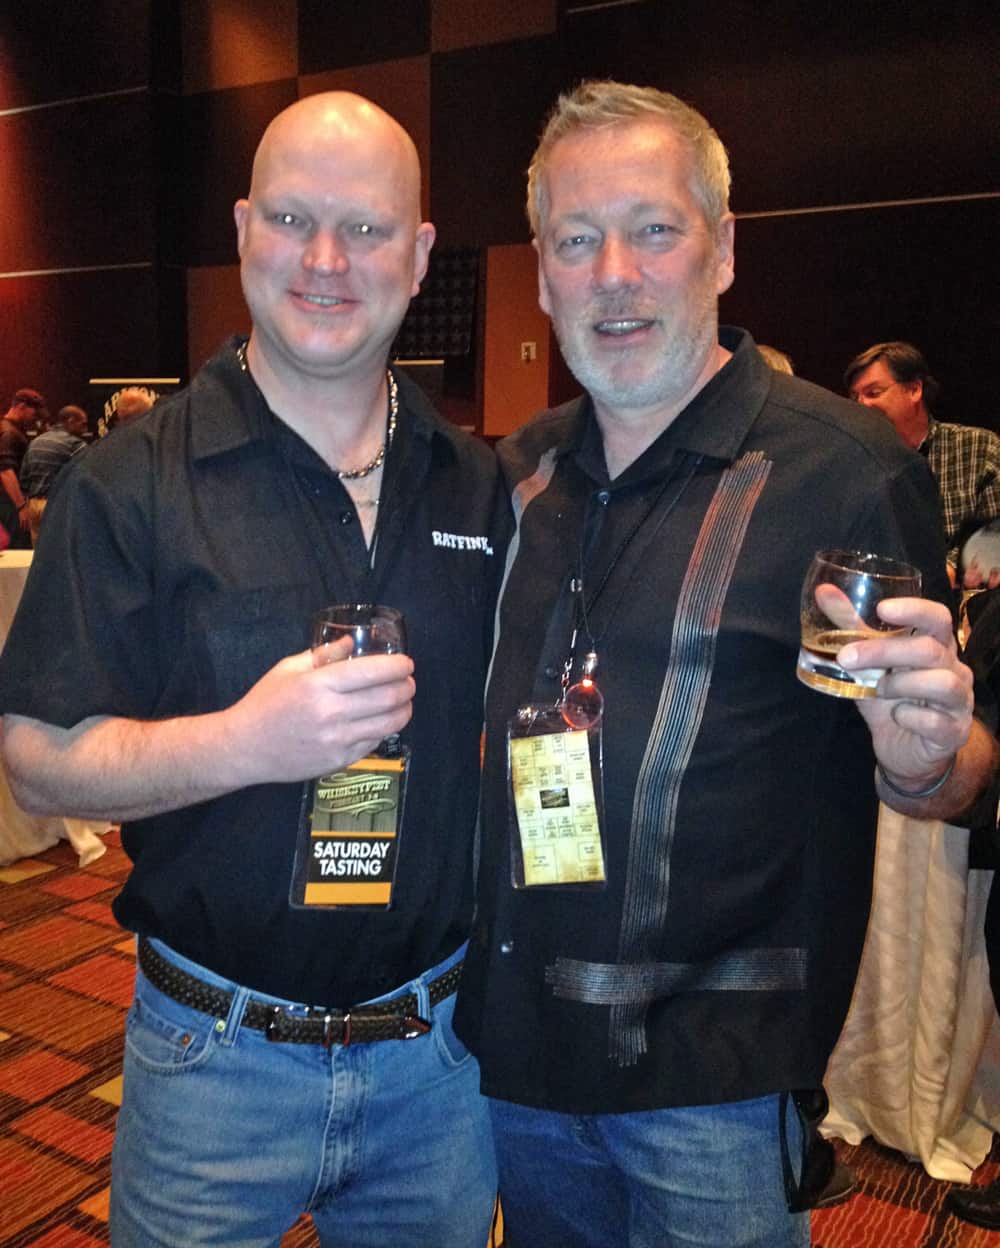 WhiskeyFest 2014 - James Walkenshaw and A.D.Cook, Las Vegas, NV